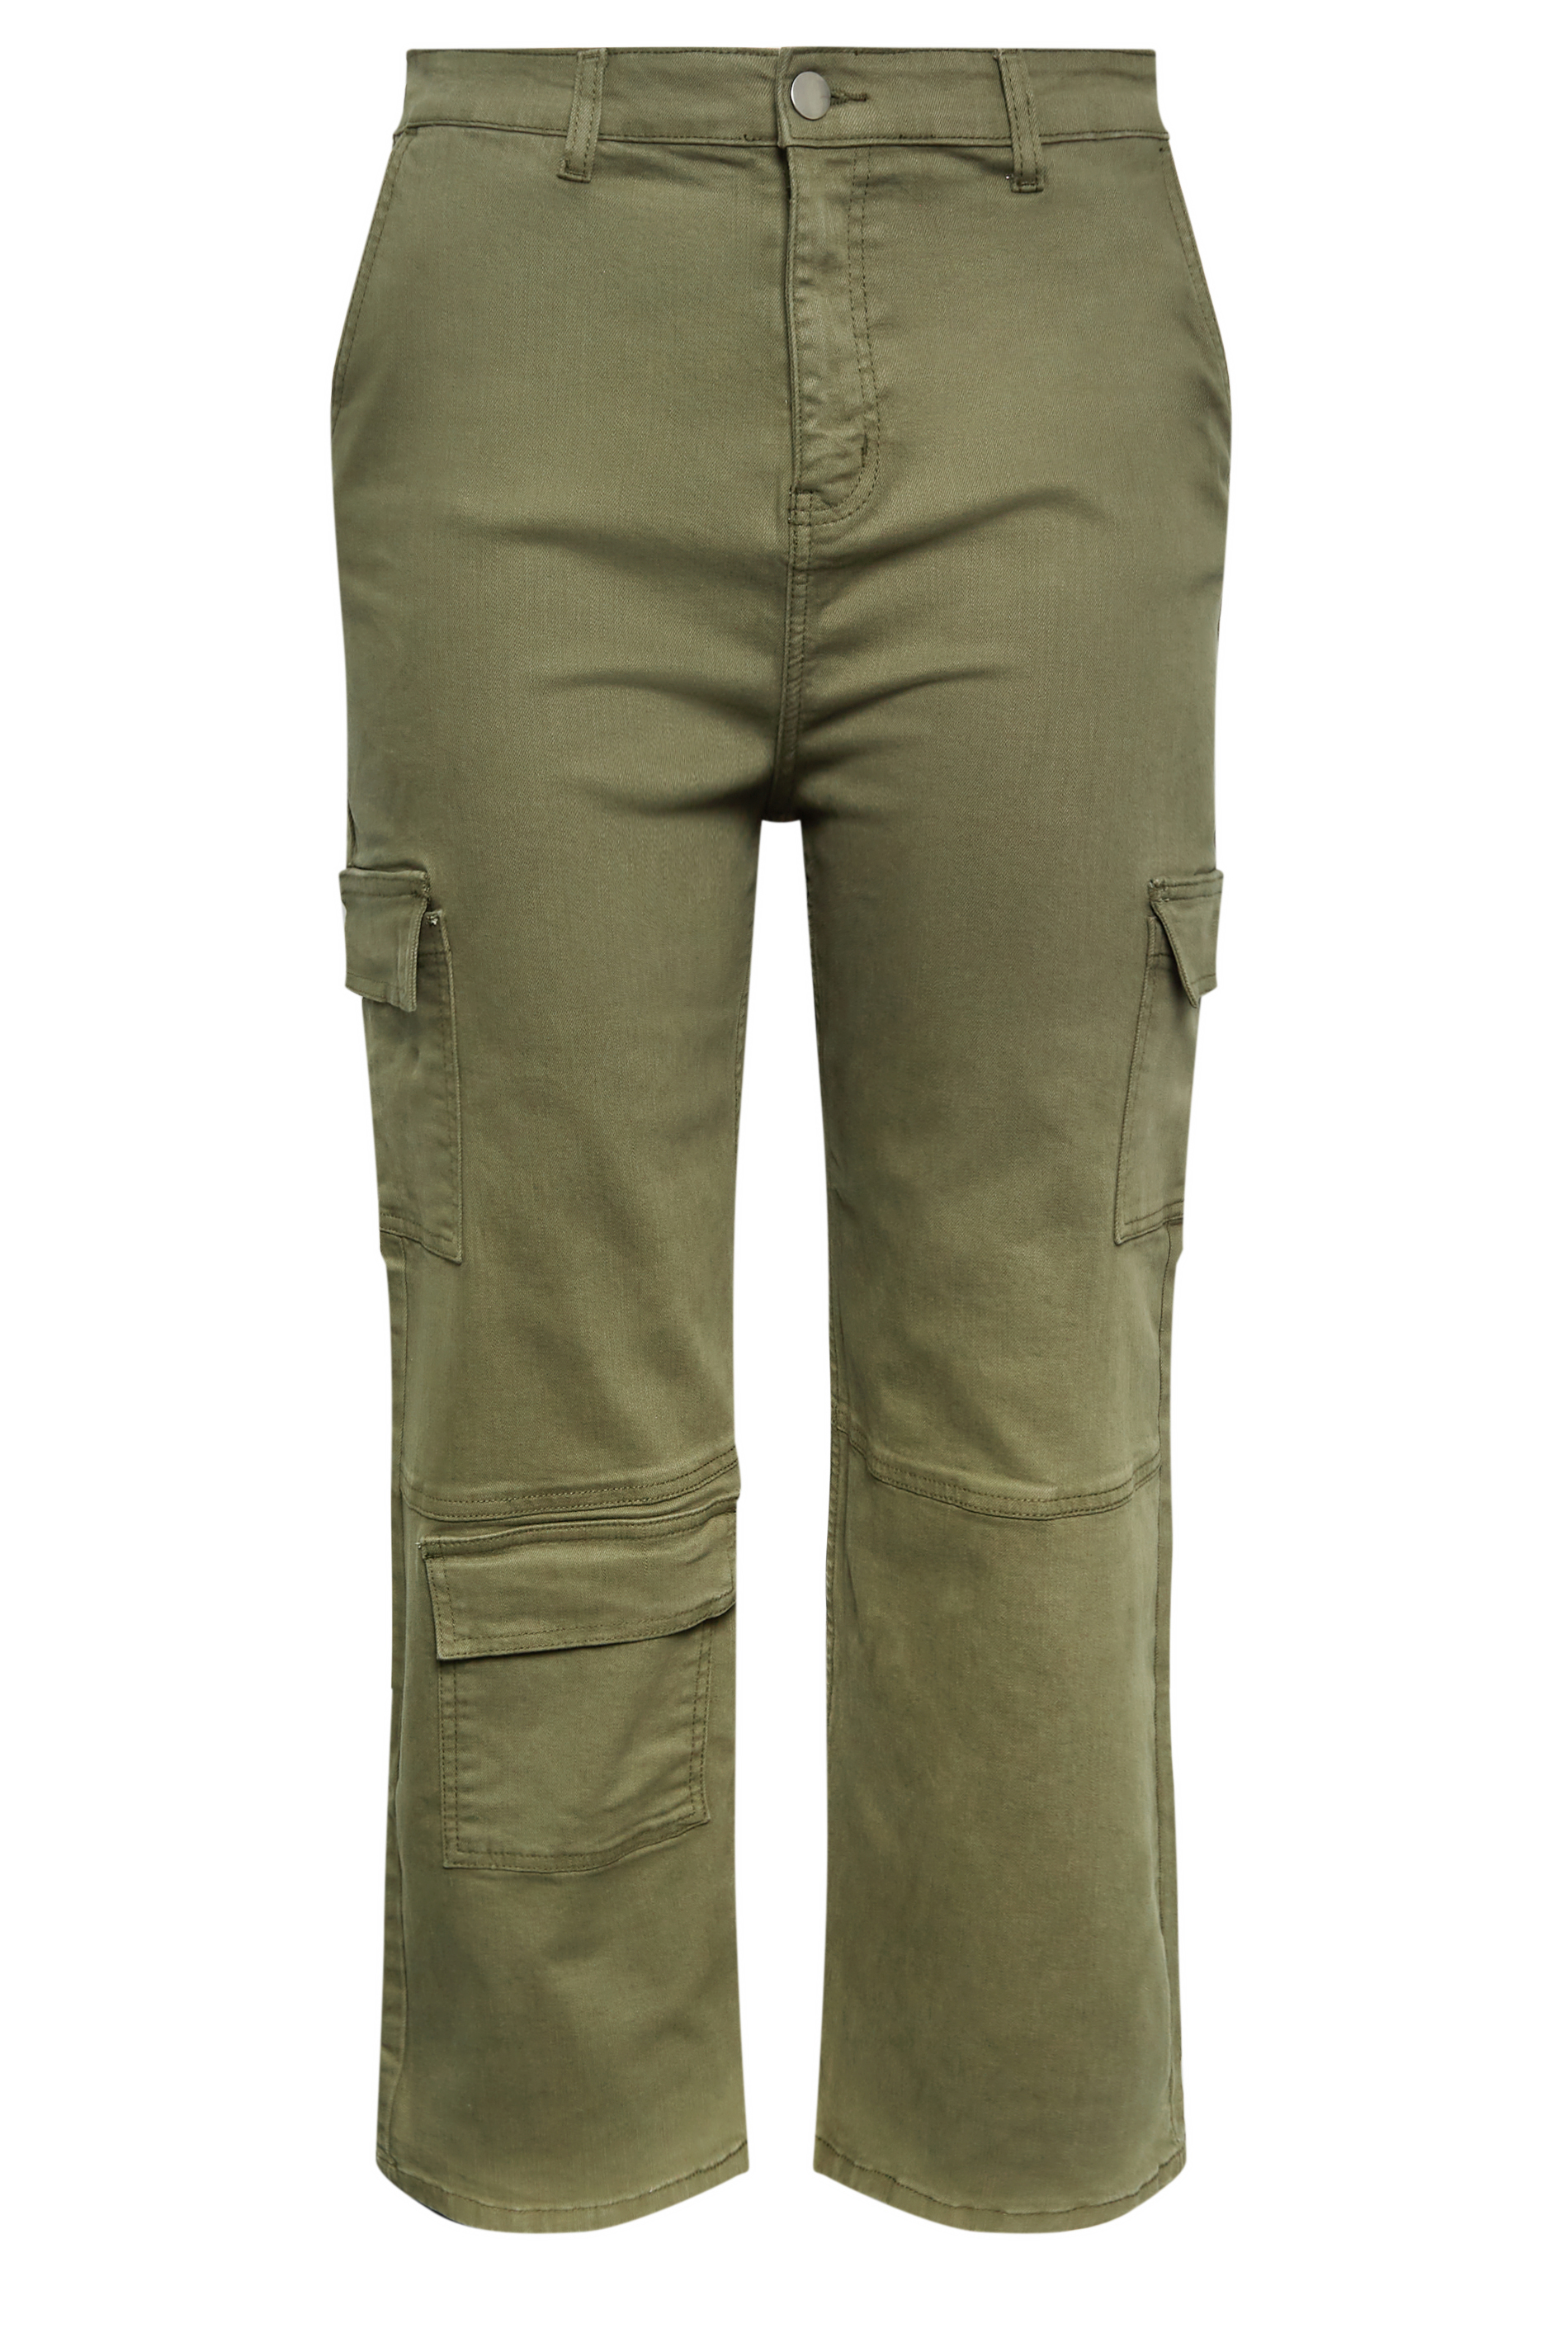 Shop Slim Fit Olive Green Cargo Pants Men Online in India